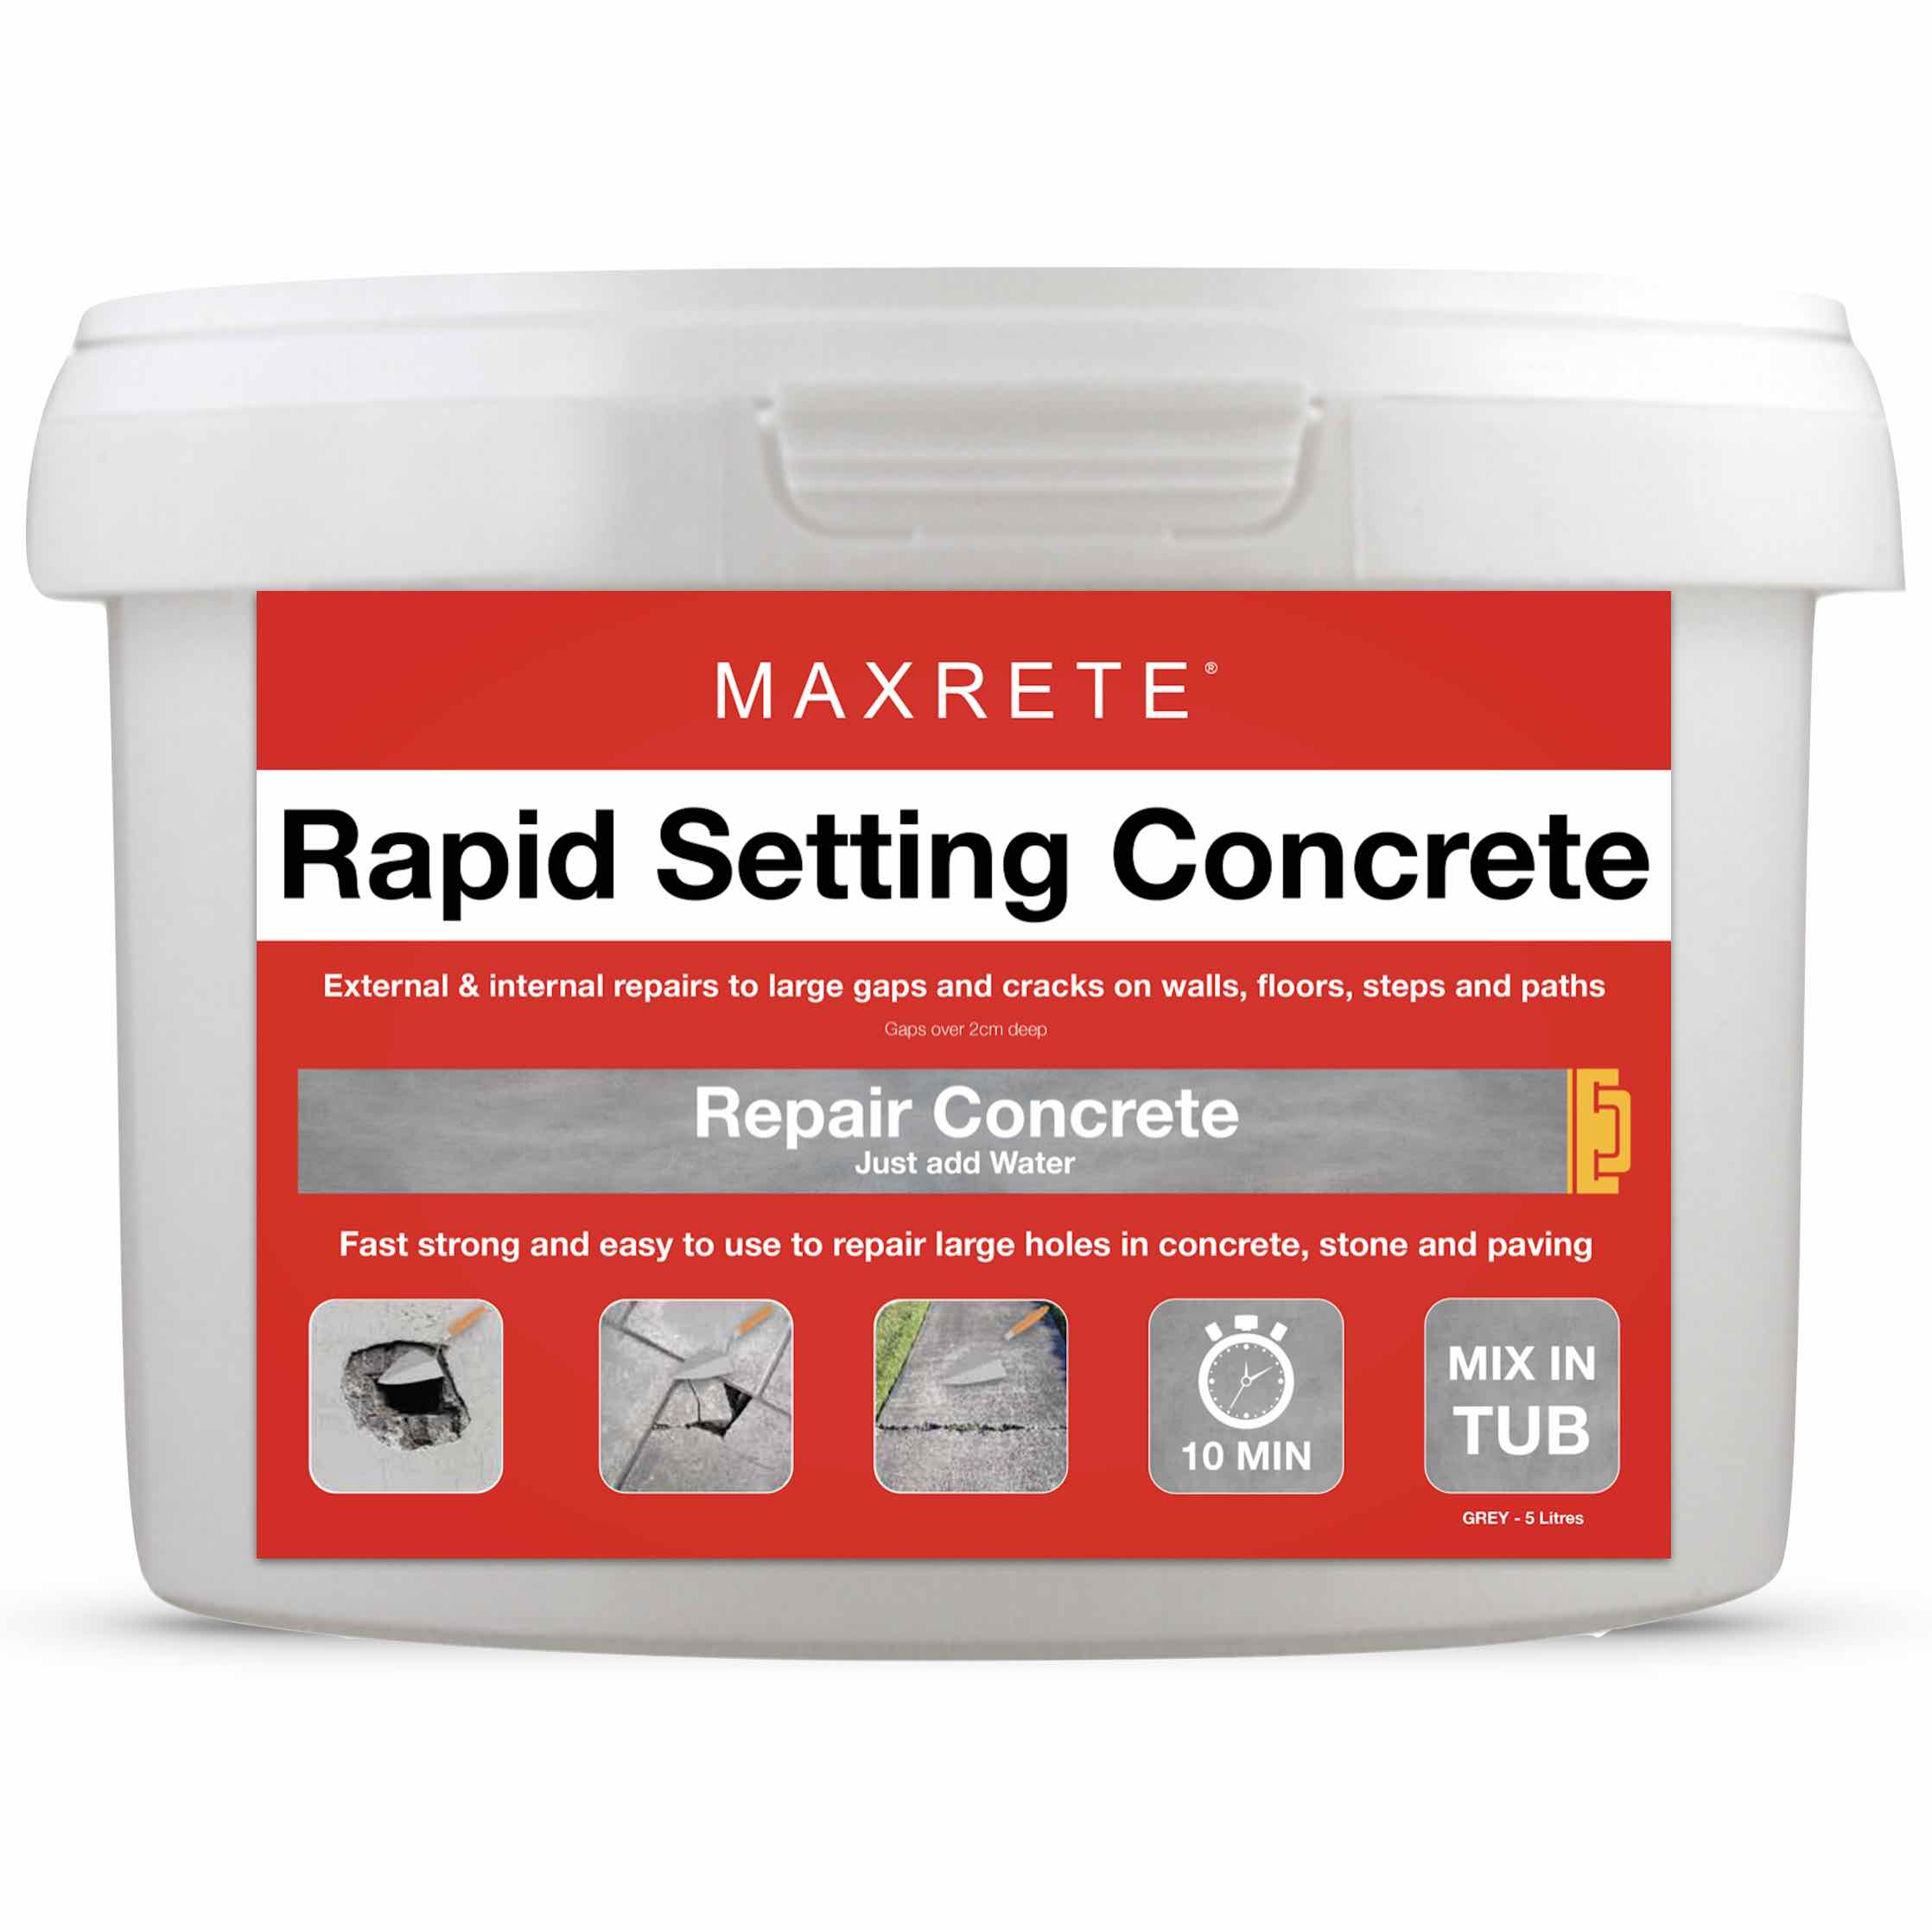 Rapid Setting Concrete 'Mix in Tub' Incl Multi-Use Kit